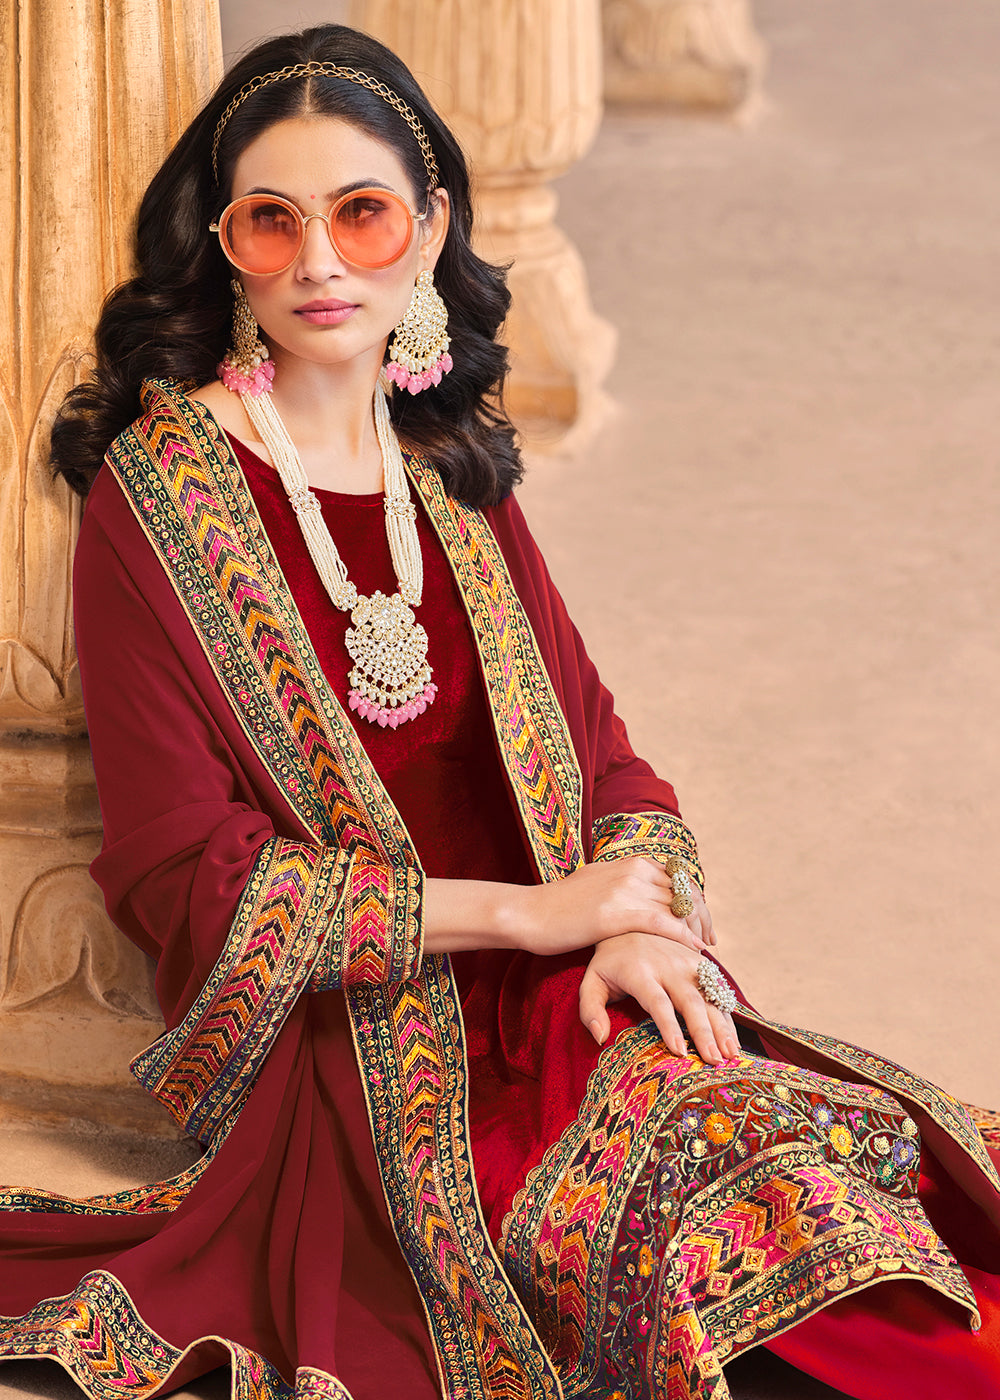 Buy Now Wedding Festive Velvet Red Pant Style Salwar Suit Online in USA, UK, Canada, Germany, Australia & Worldwide at Empress Clothing.